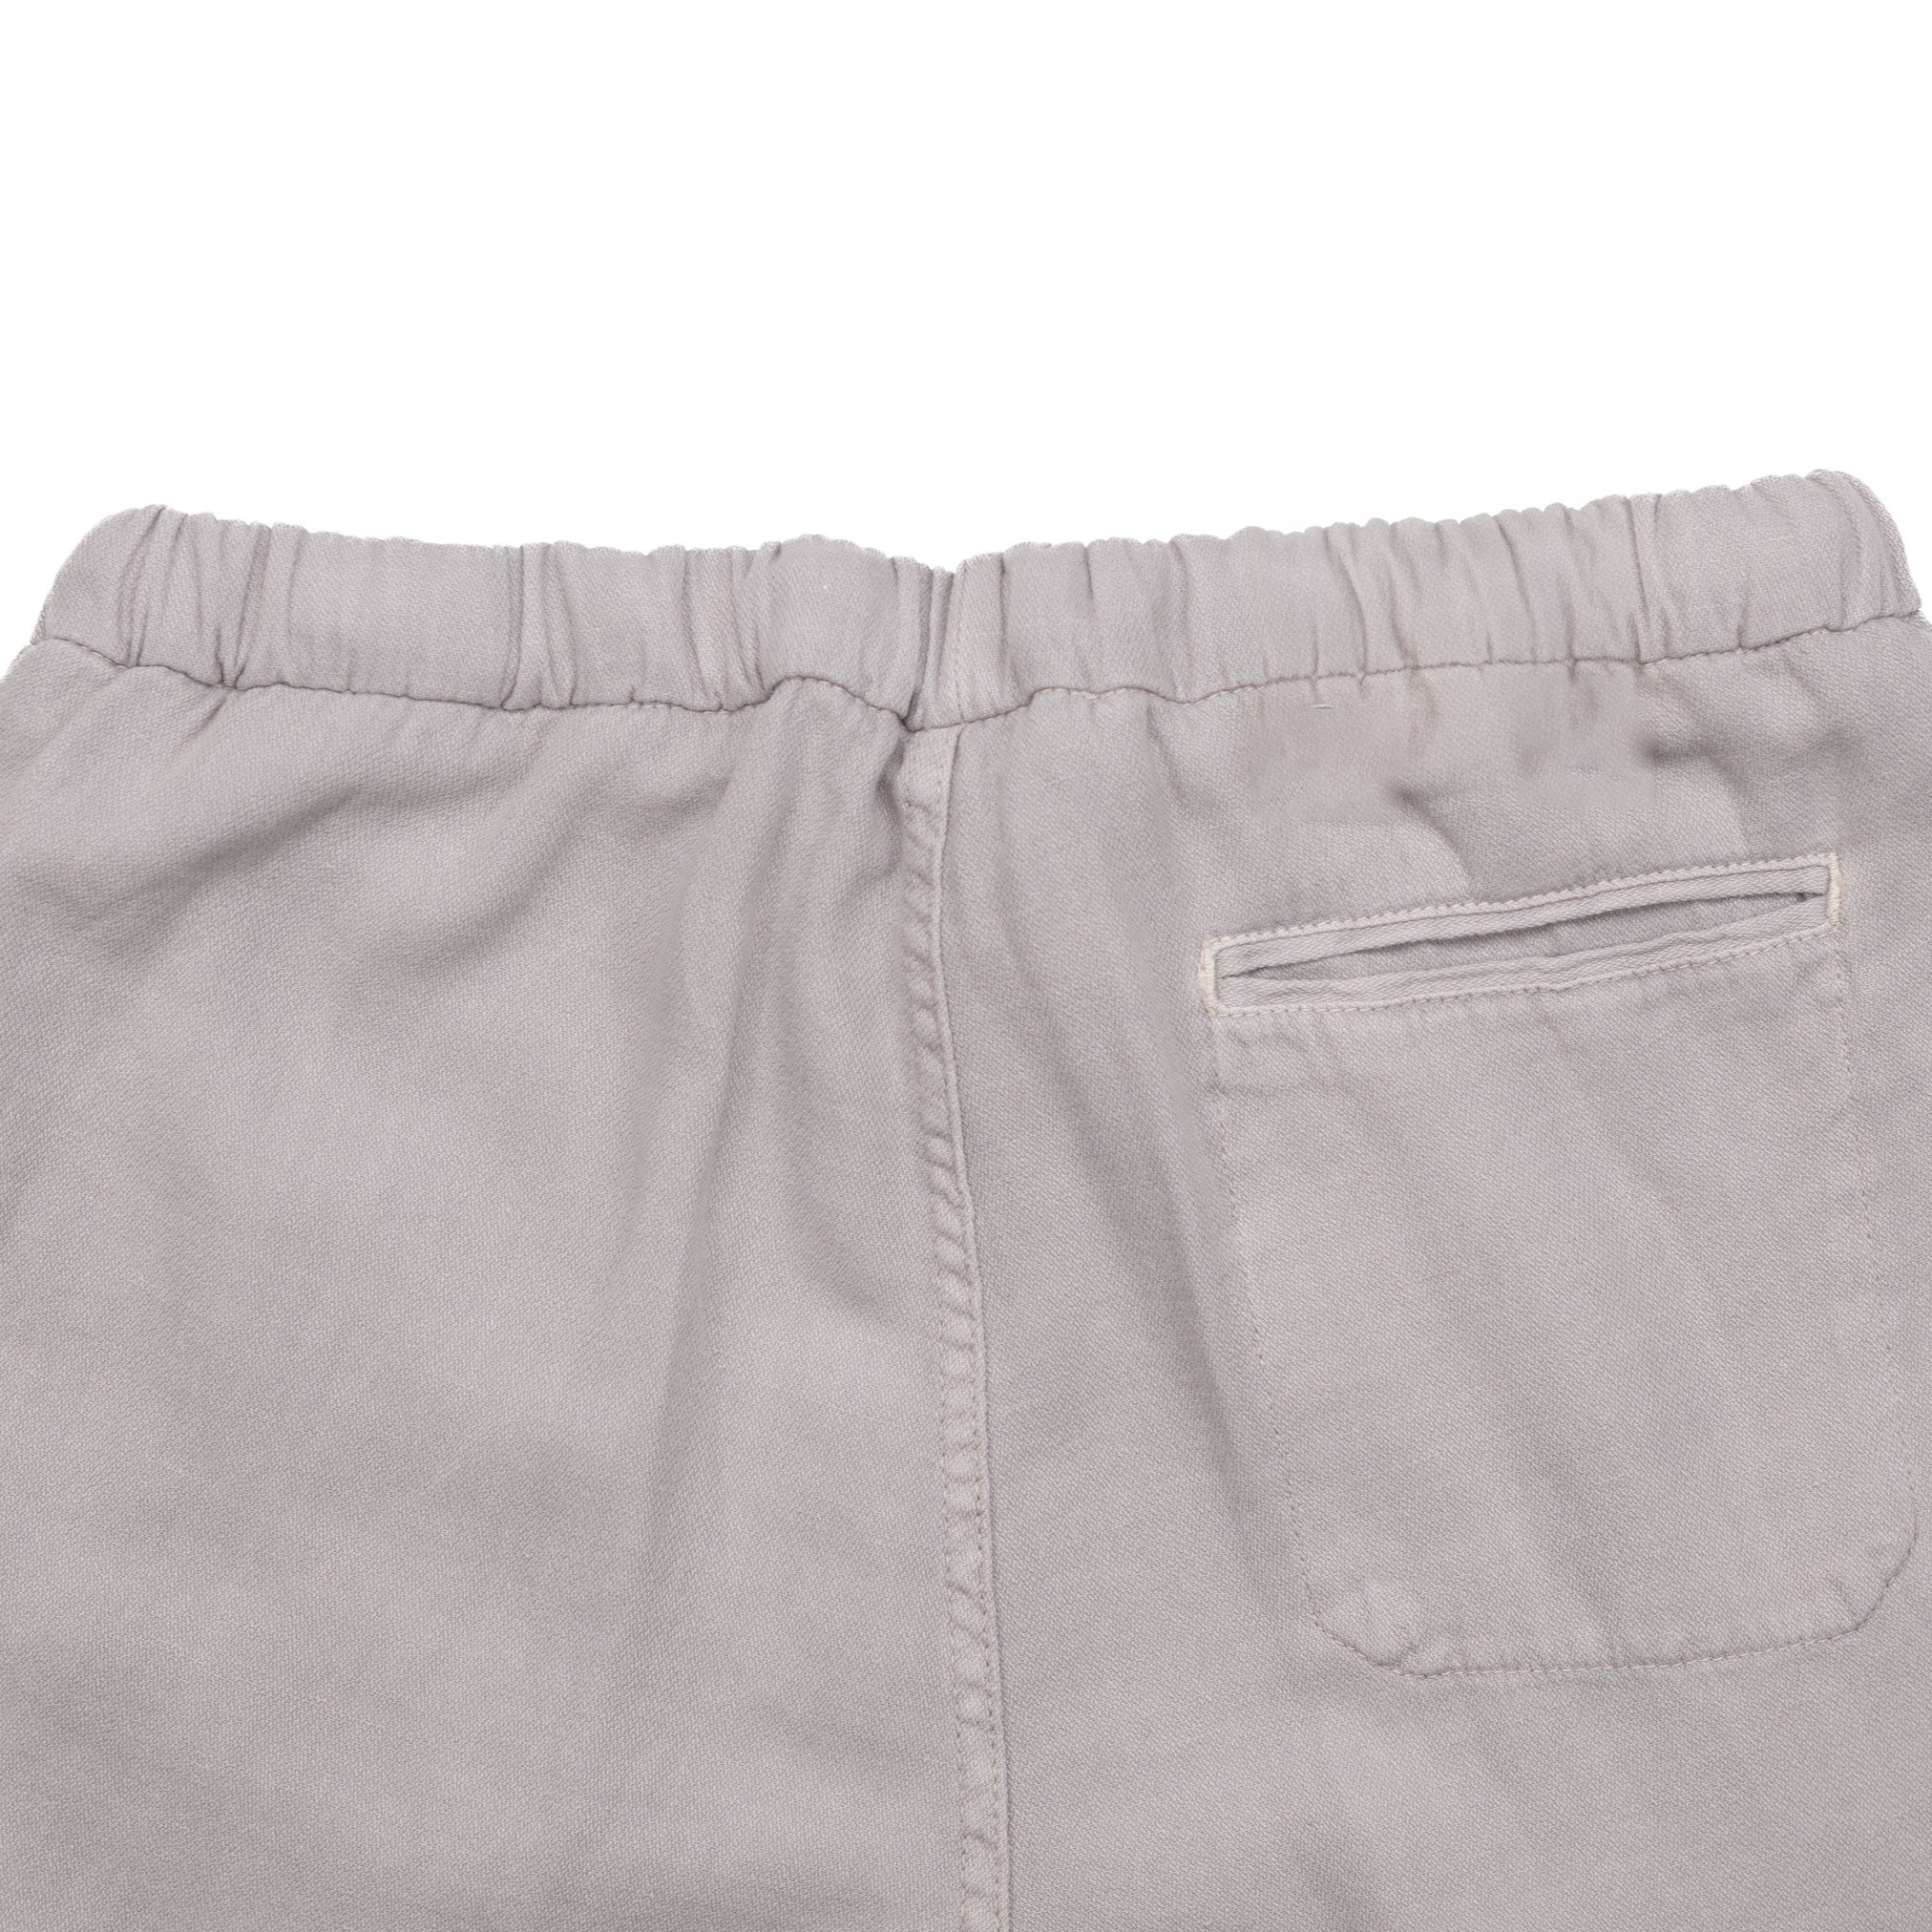 Bali Shorts in Light Grey